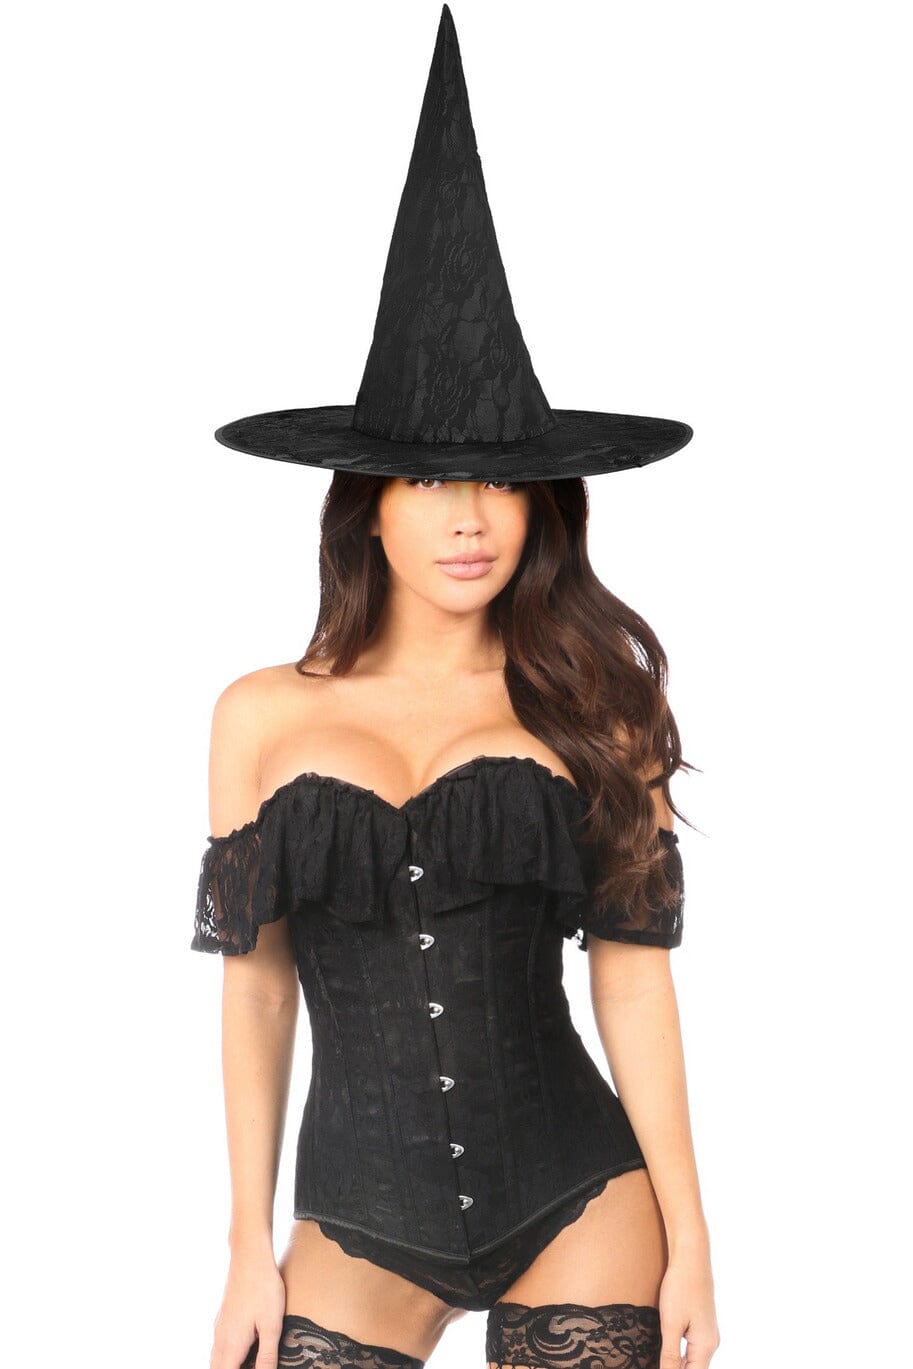 Lavish 3 PC Premium Lace Witch Corset Costume-Witch Costumes-Daisy Corsets-SEXYSHOES.COM